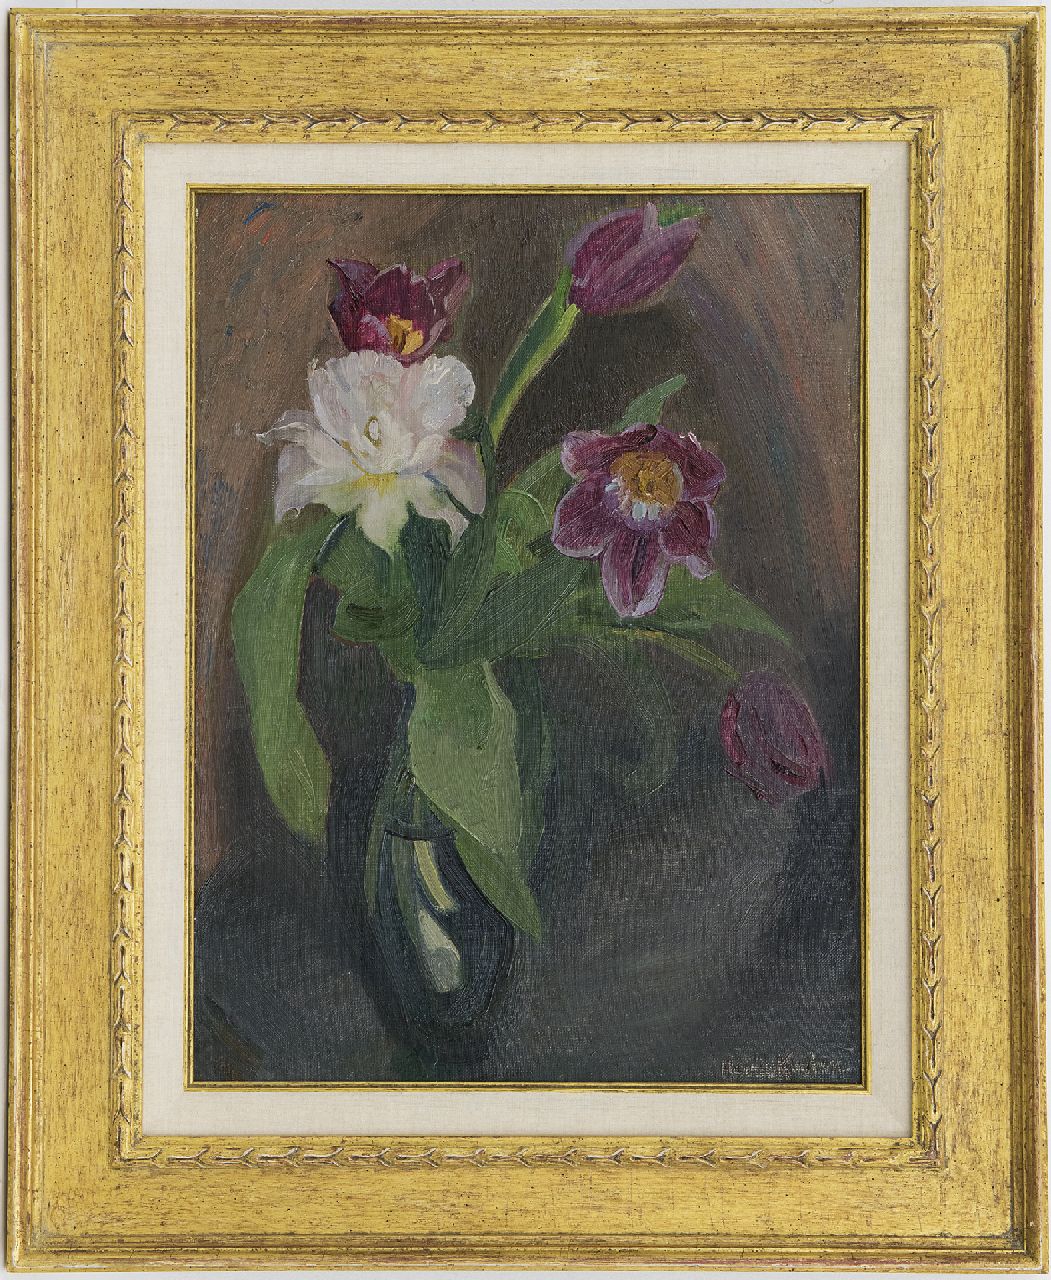 Kuijten H.J.  | Henricus Johannes 'Harrie' Kuijten | Paintings offered for sale | Tulips, oil on canvas 50.1 x 36.3 cm, signed l.r.